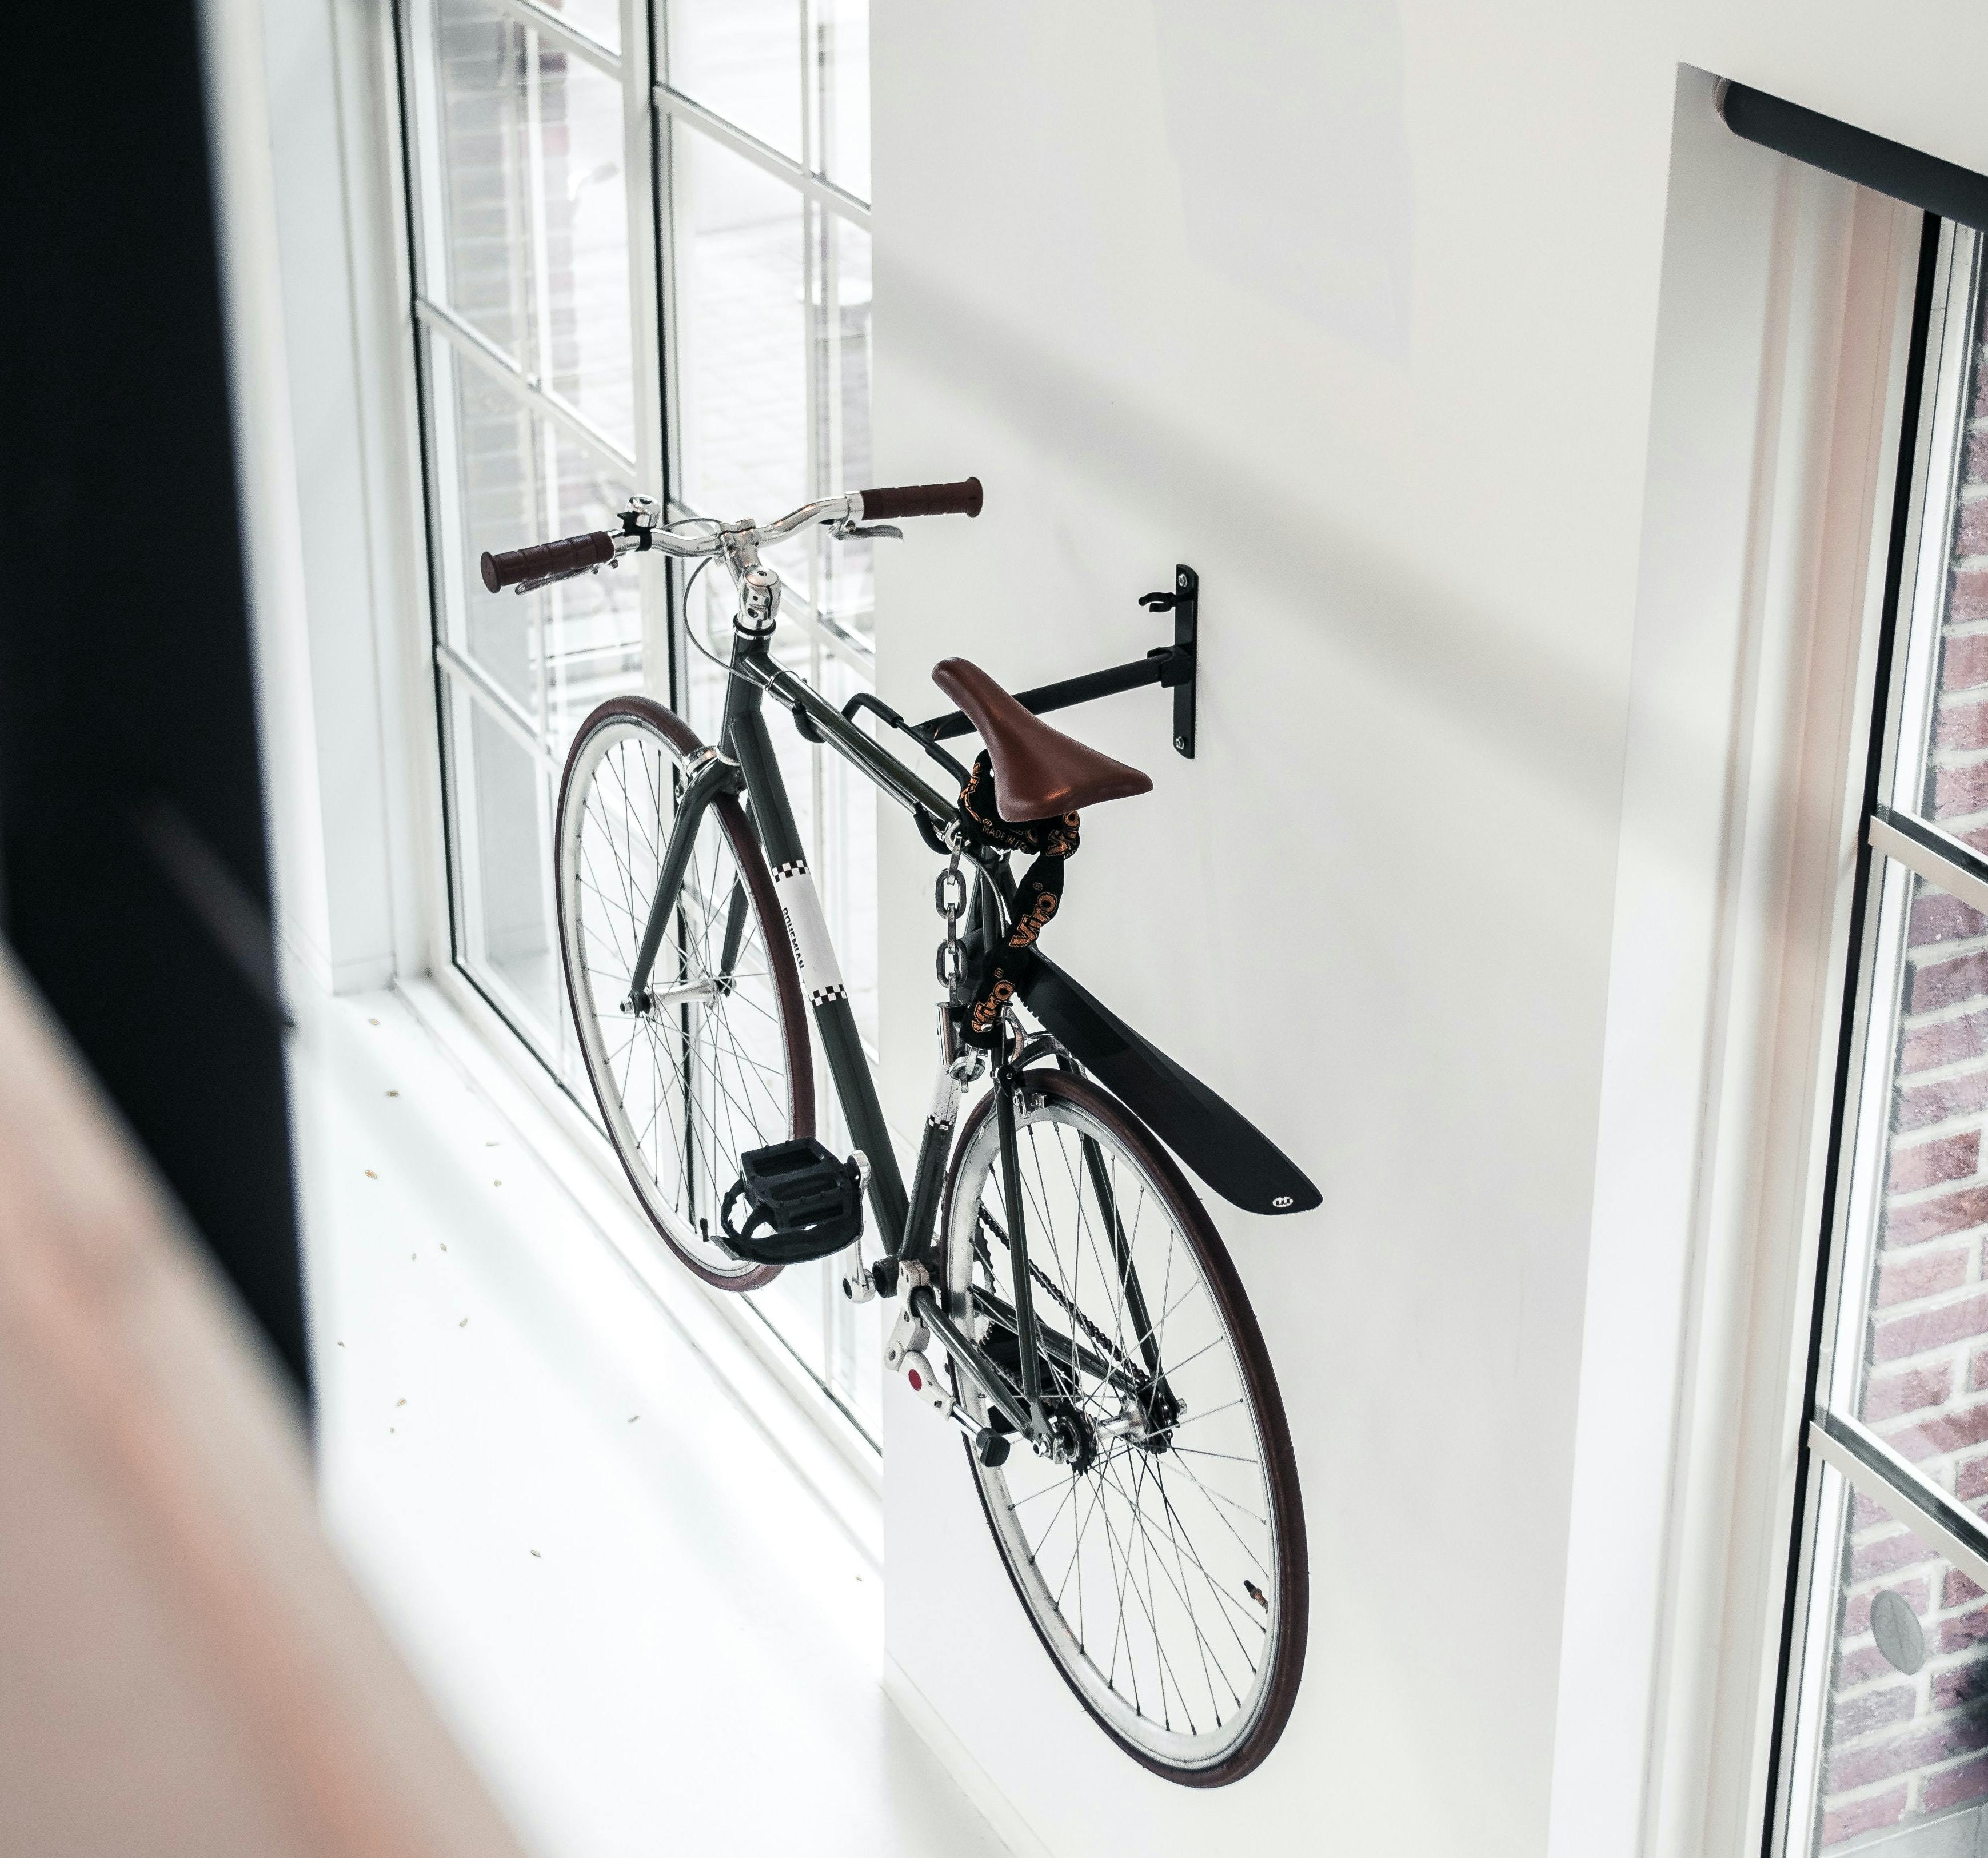 A bike mounted to a wall.